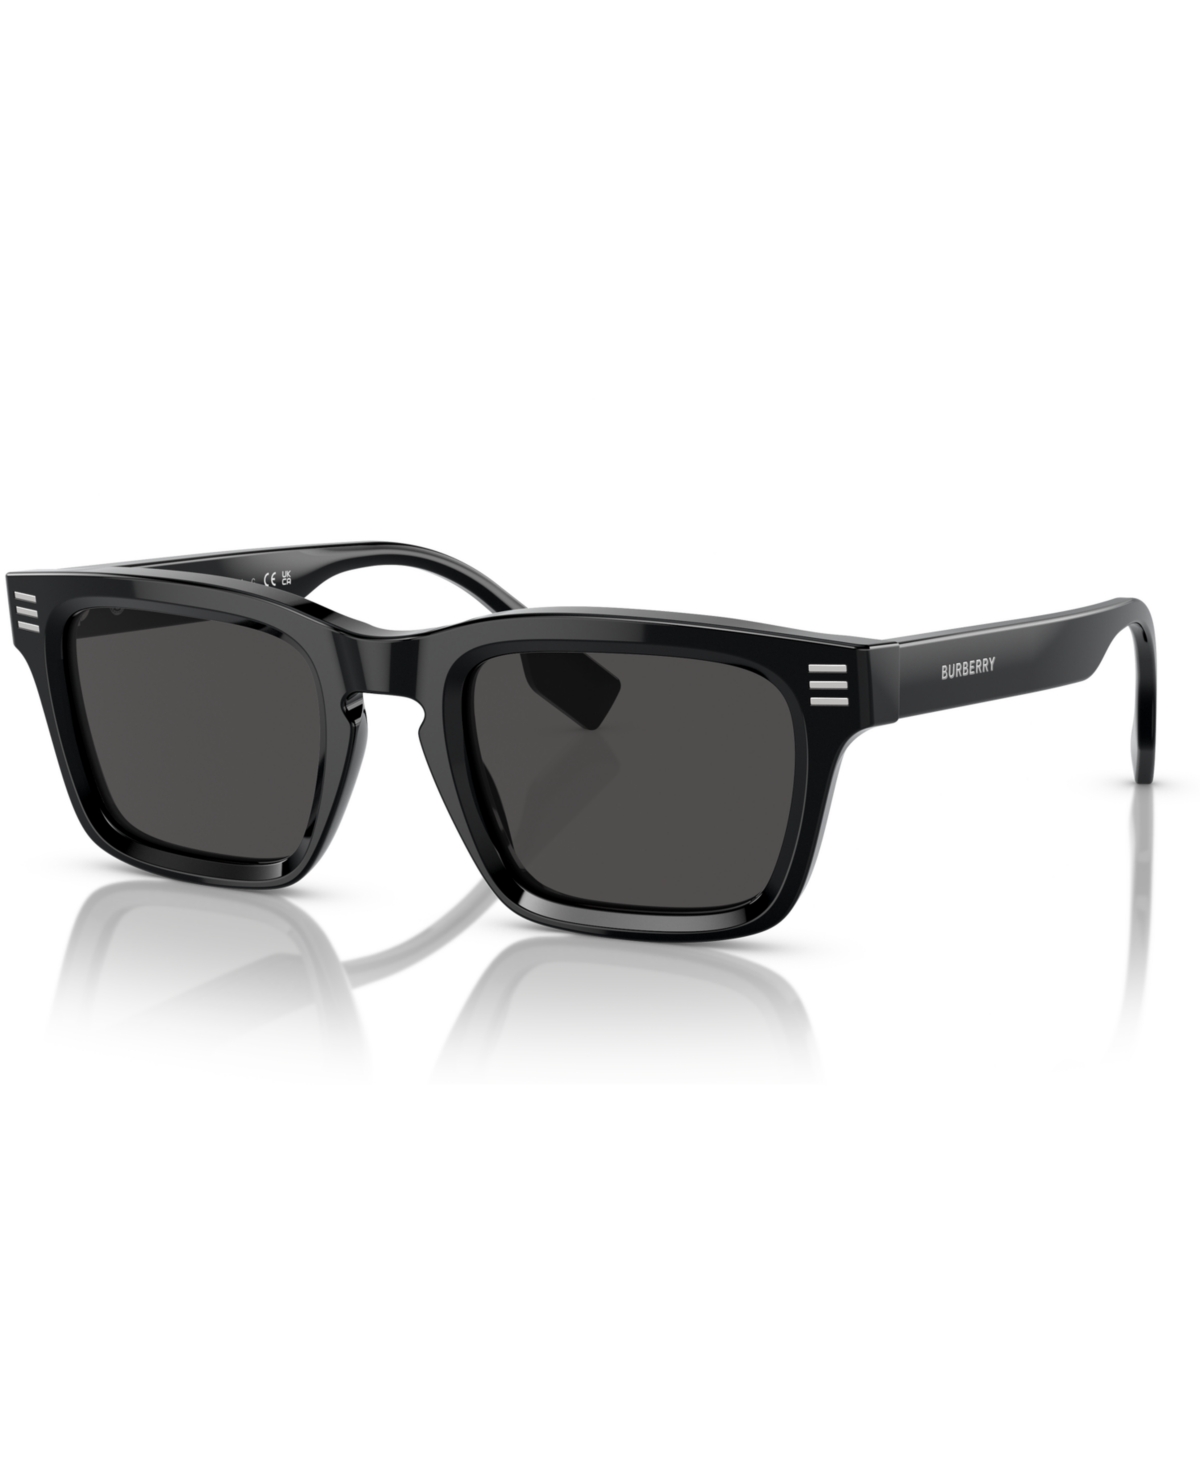 Men's Sunglasses BE4403 - Black